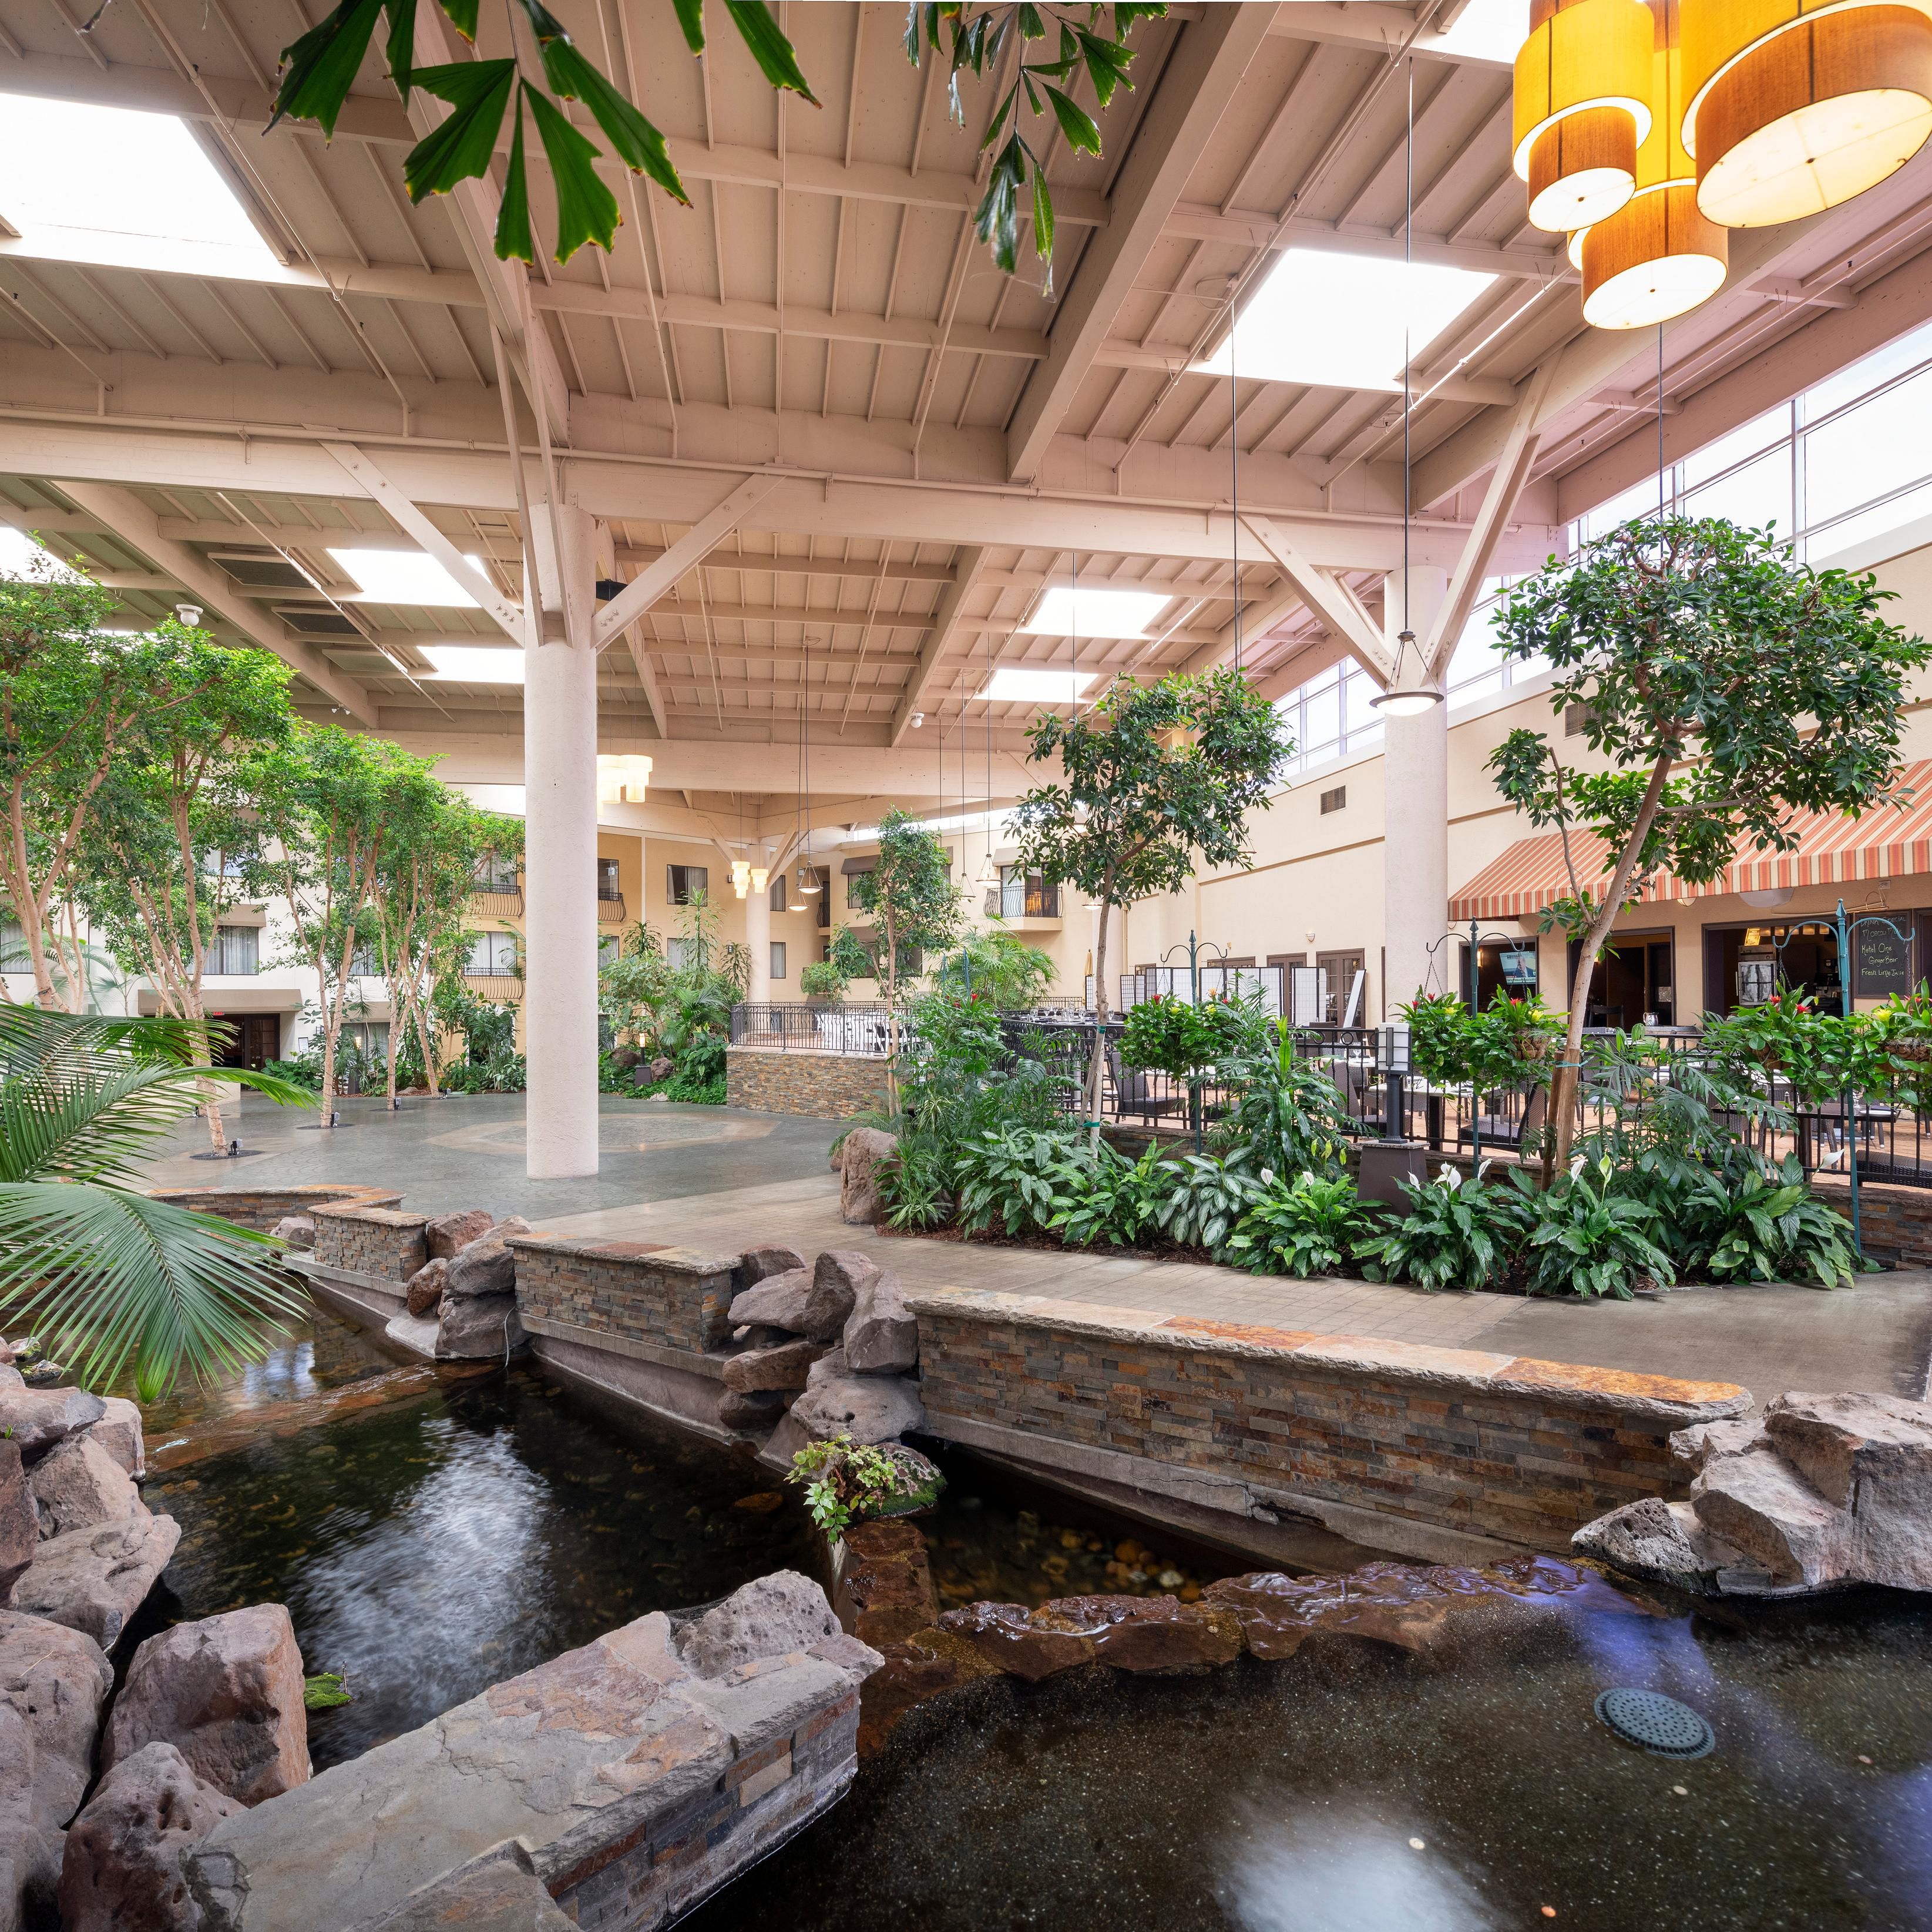 Take in lush greenery in our lobby Atrium